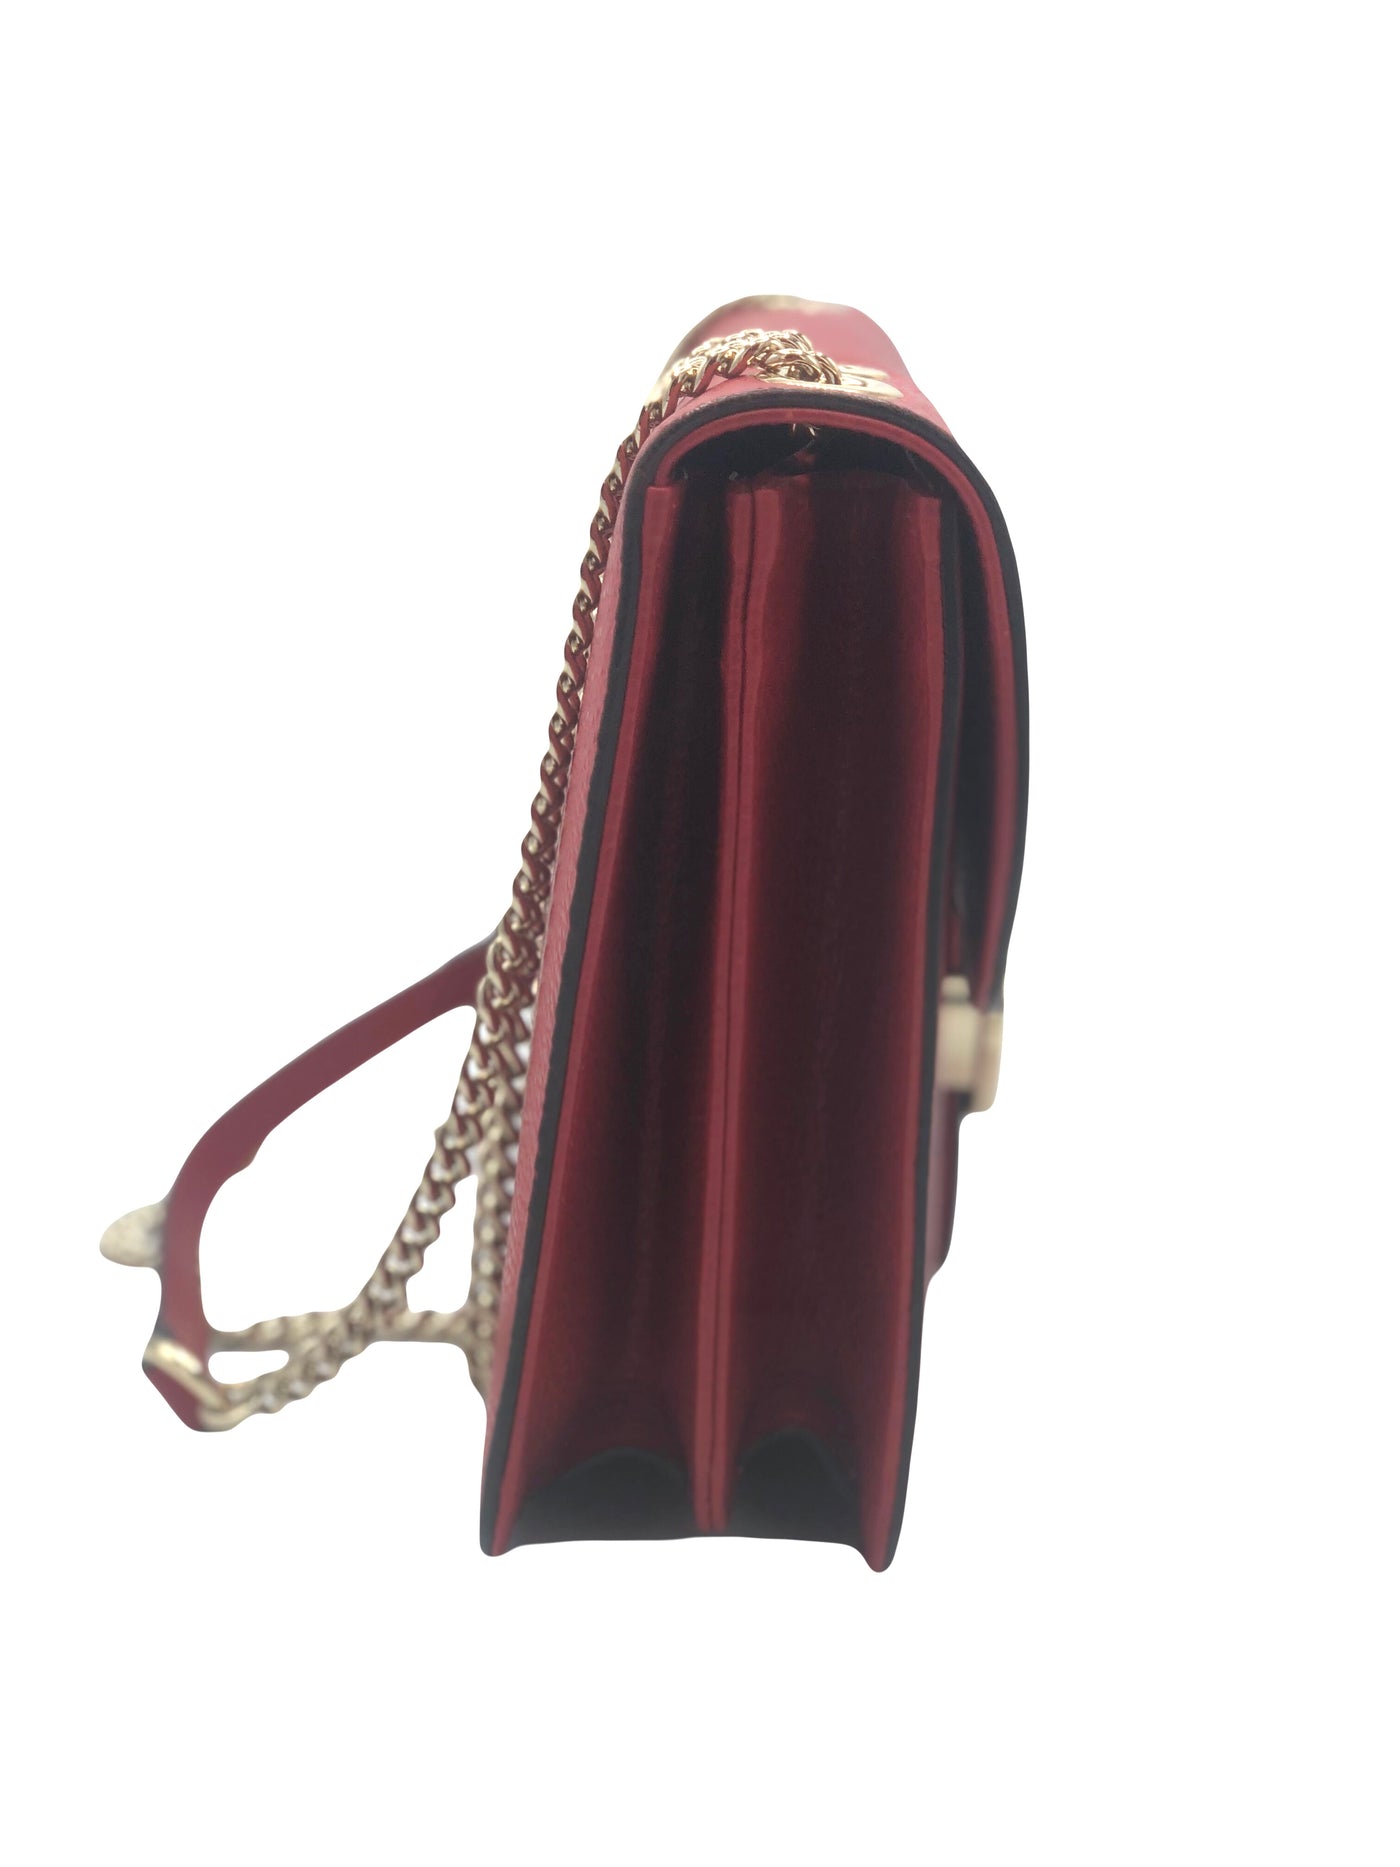 GUCCI red large interlocking grain calfskin handbag with gold chain